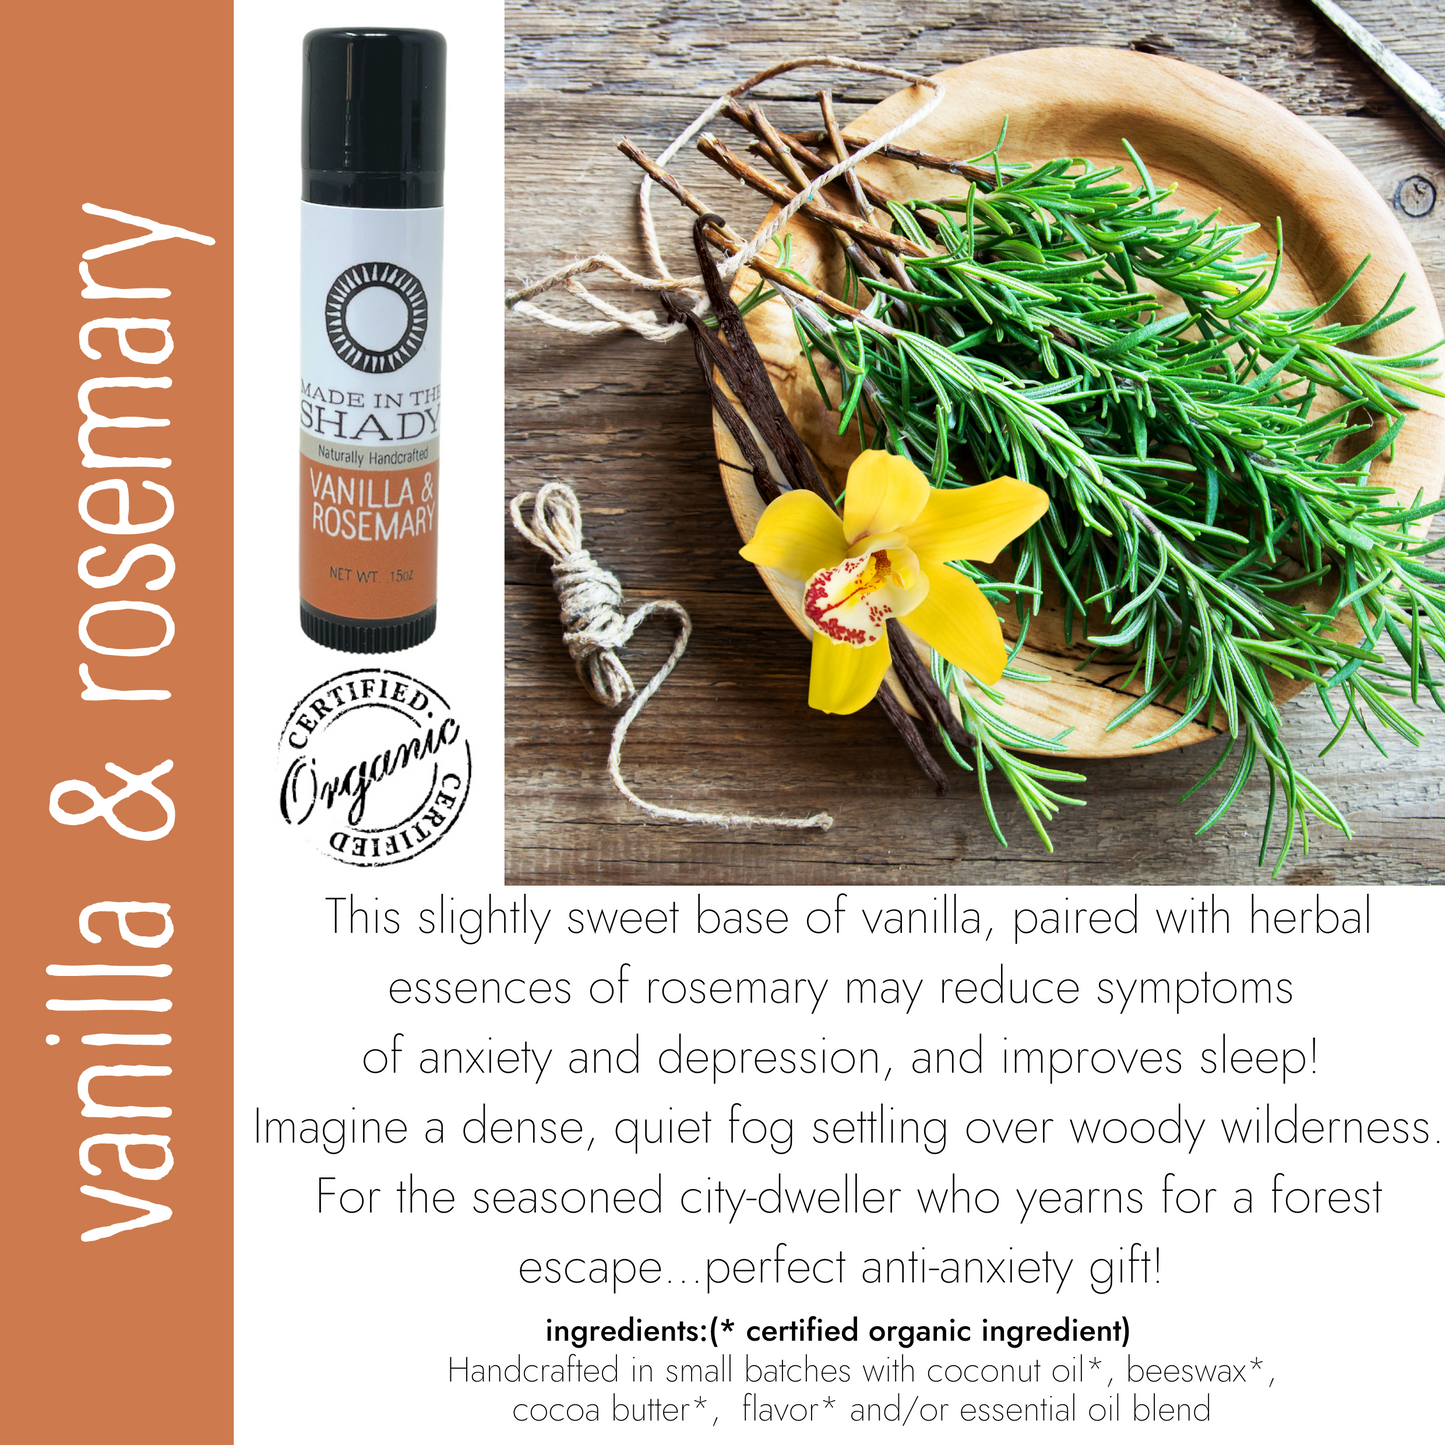 Best Seller Organic Lip Balm Collection includes Vanilla Rosemary Lip Balm